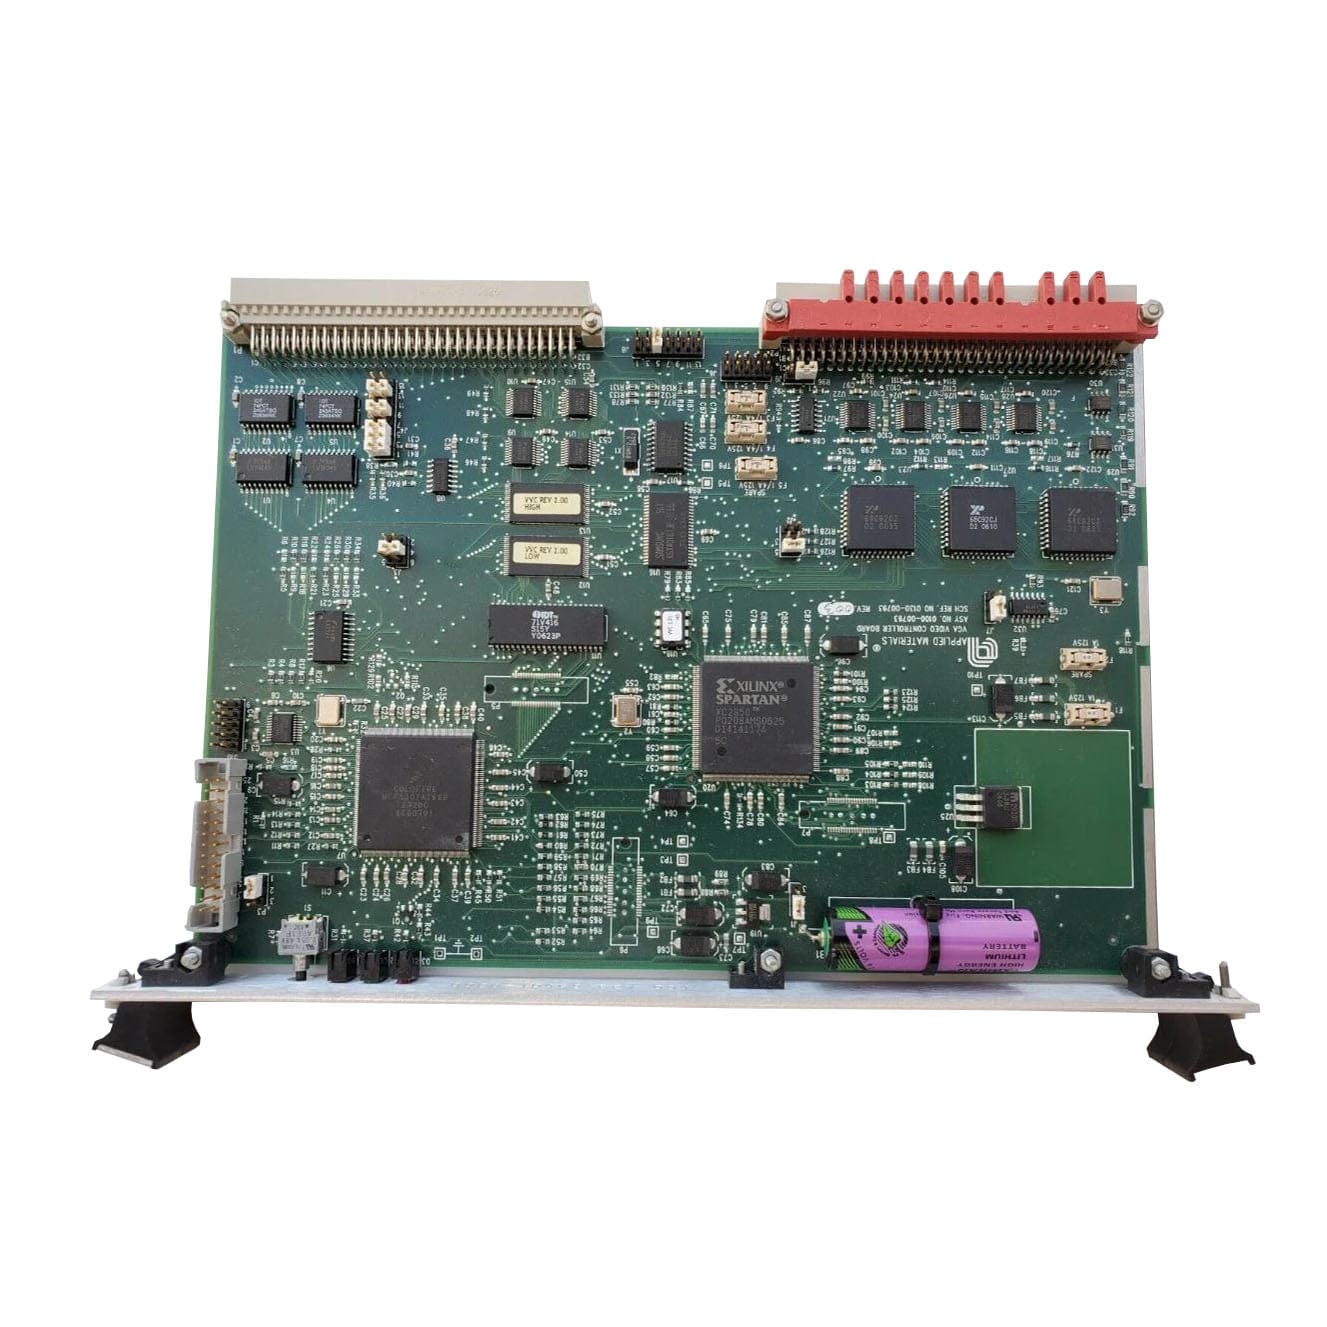 AMAT Centura/Endura Semiconductor Machine VGA Board 0100-00793